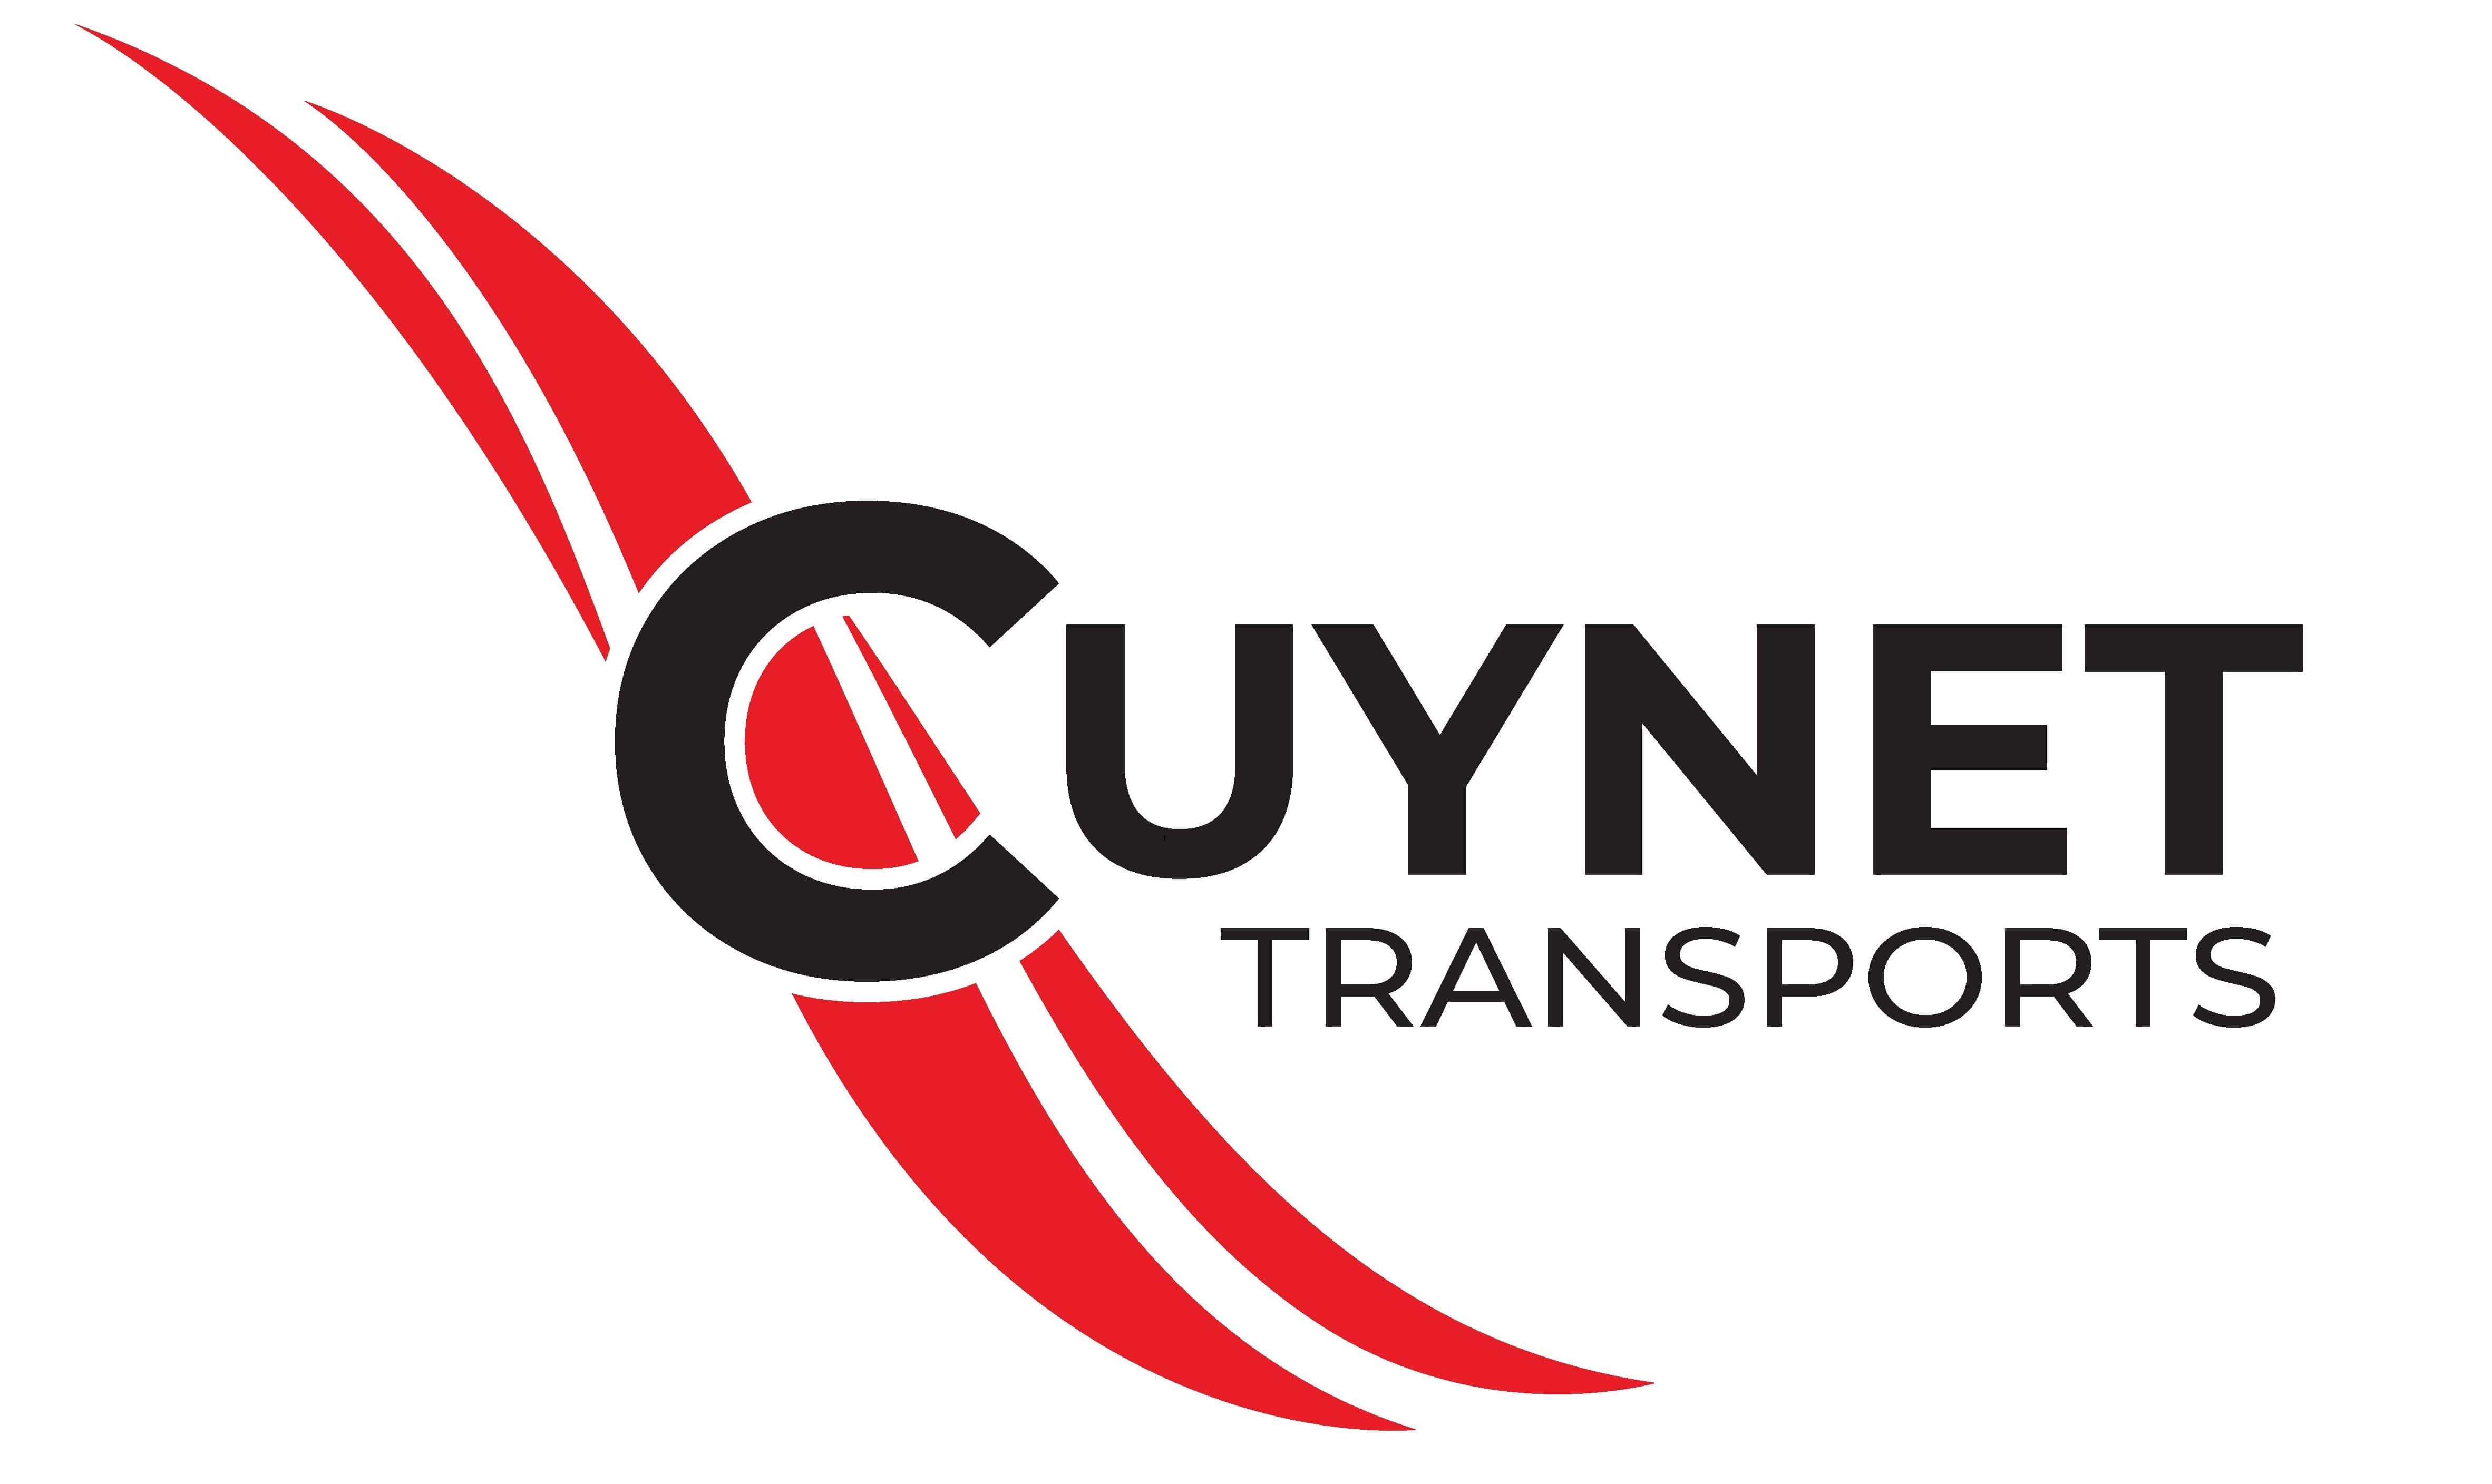 cuynet_tracteur_logo_v2-min.jpg